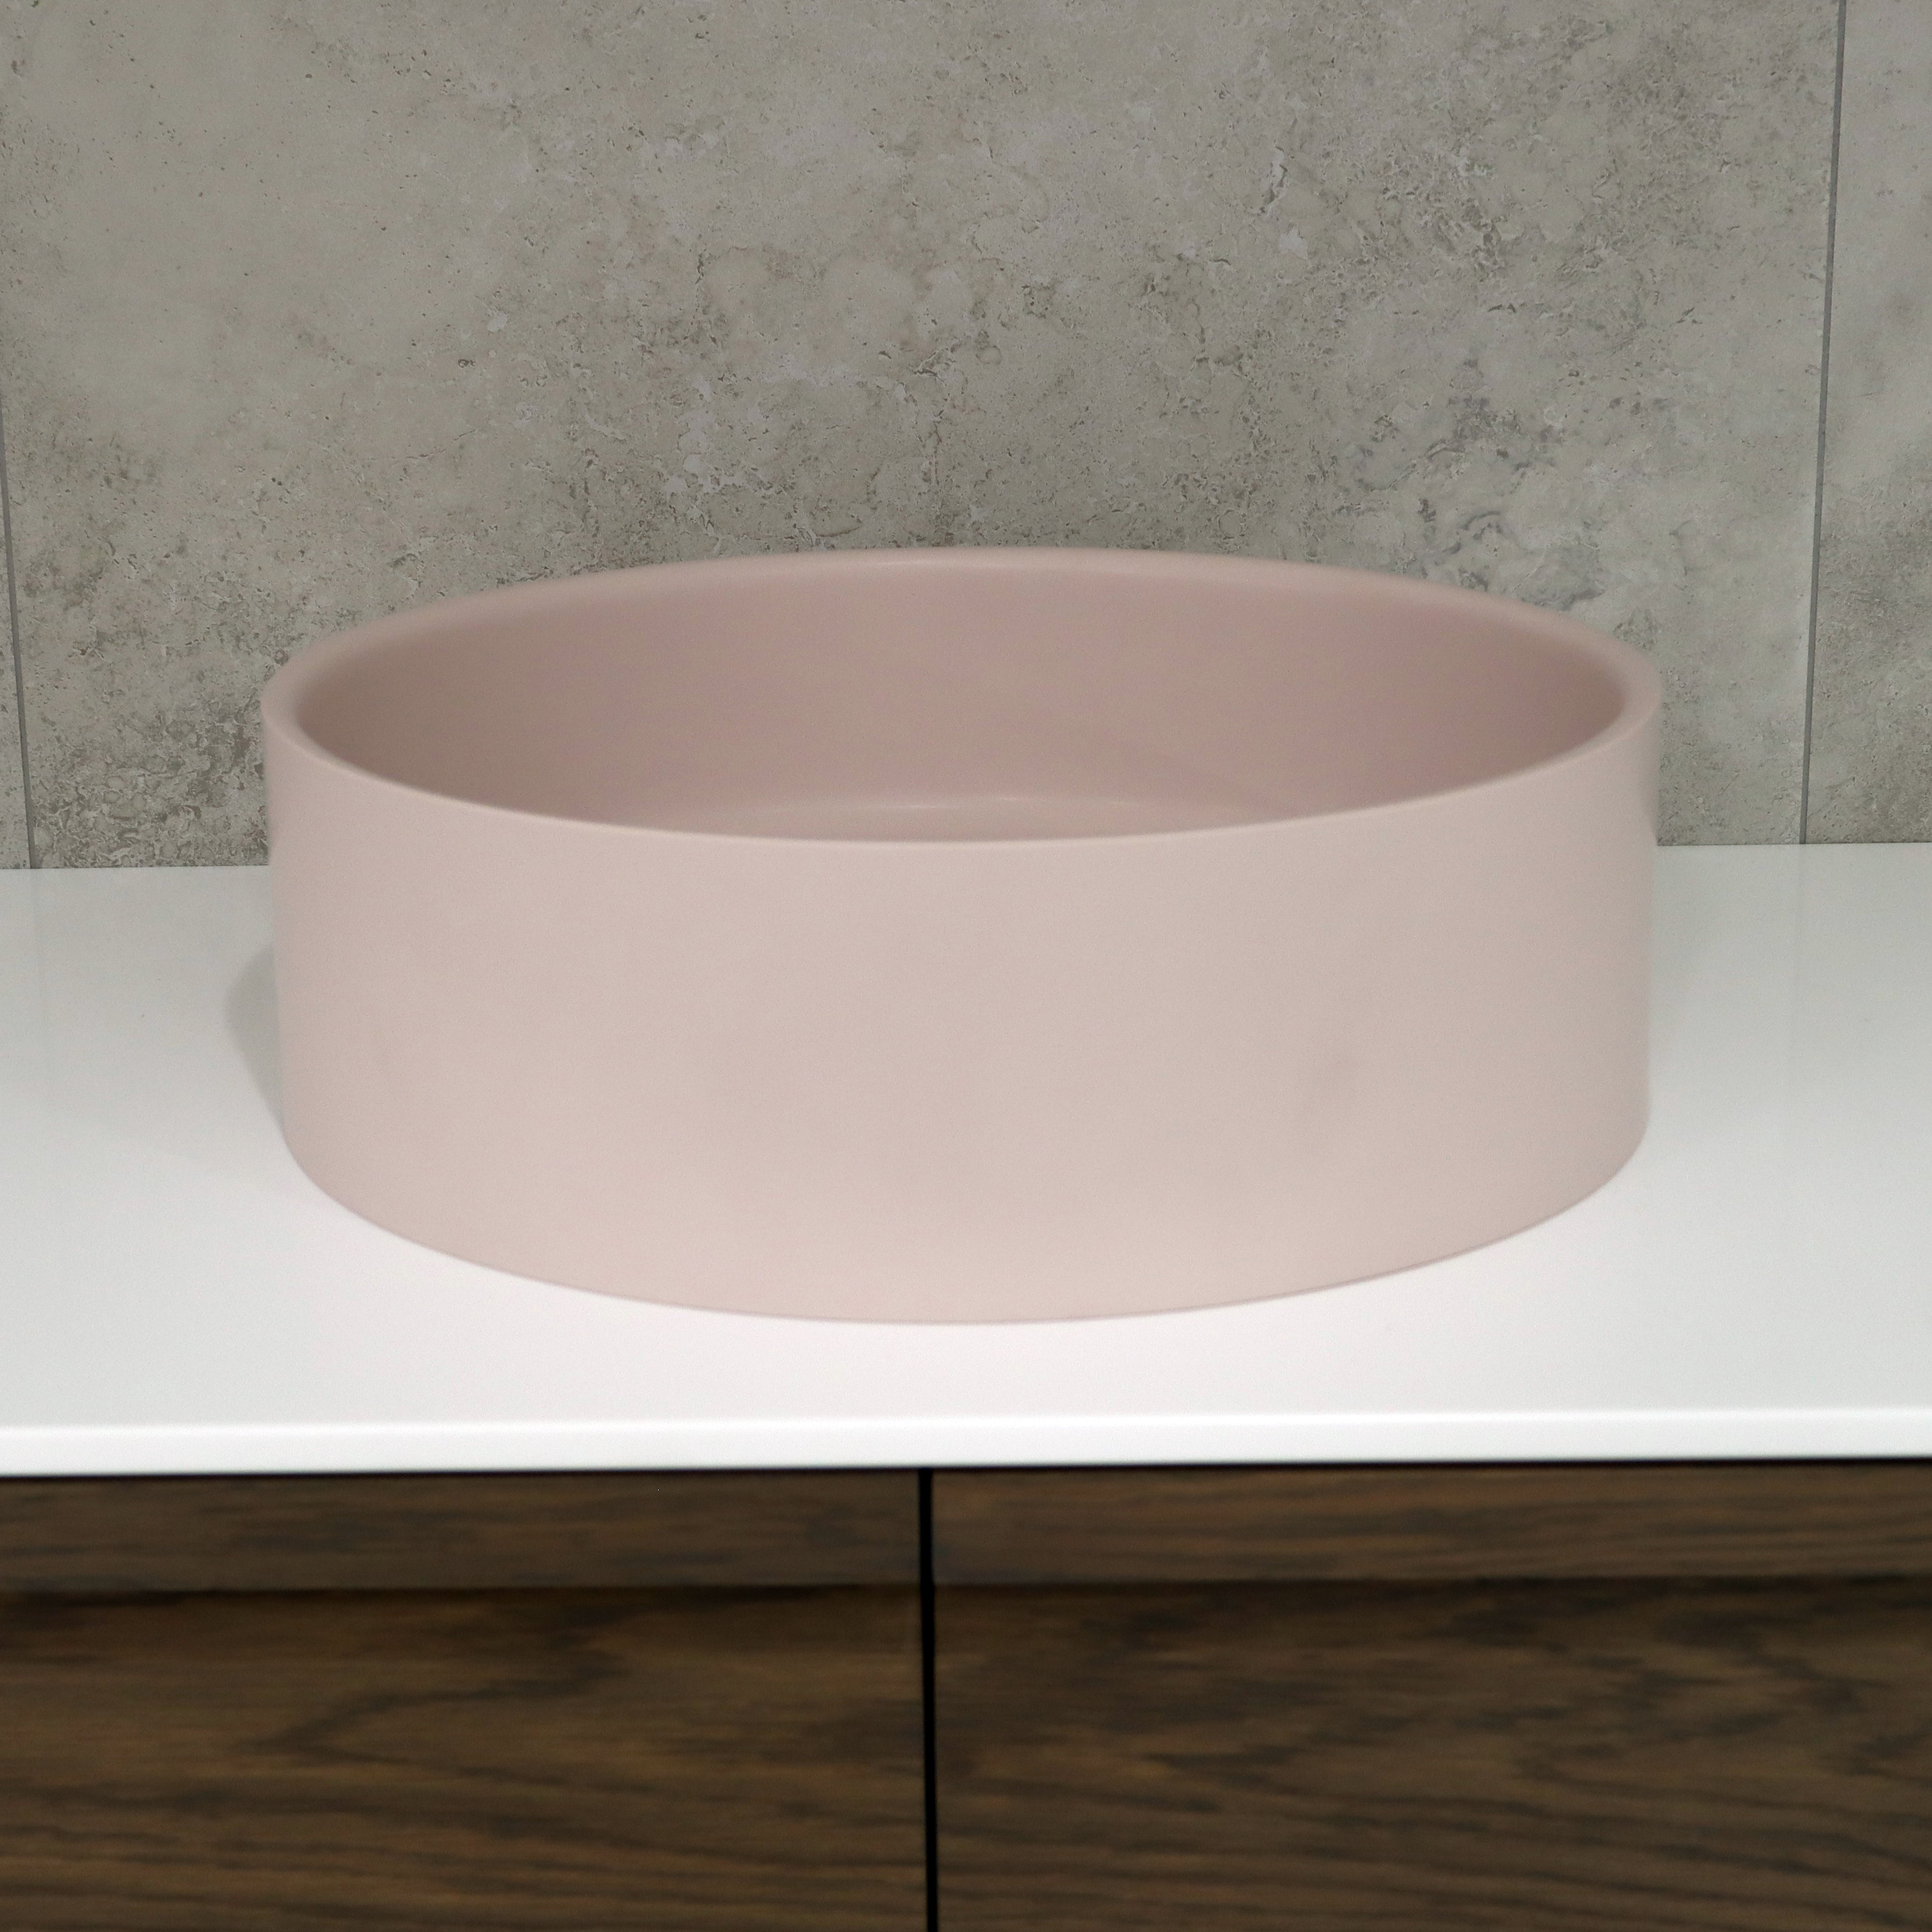 halo-villa-solid-surface-basin-round-in-matte-pink